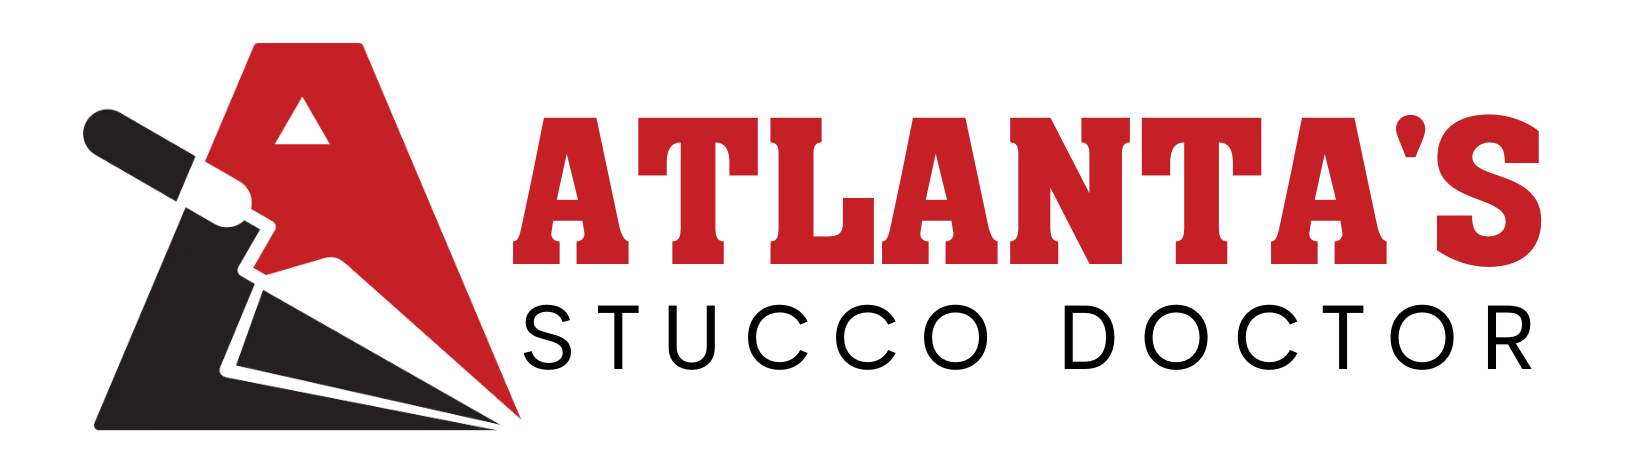 Atlanta's Stucco Doctor logo